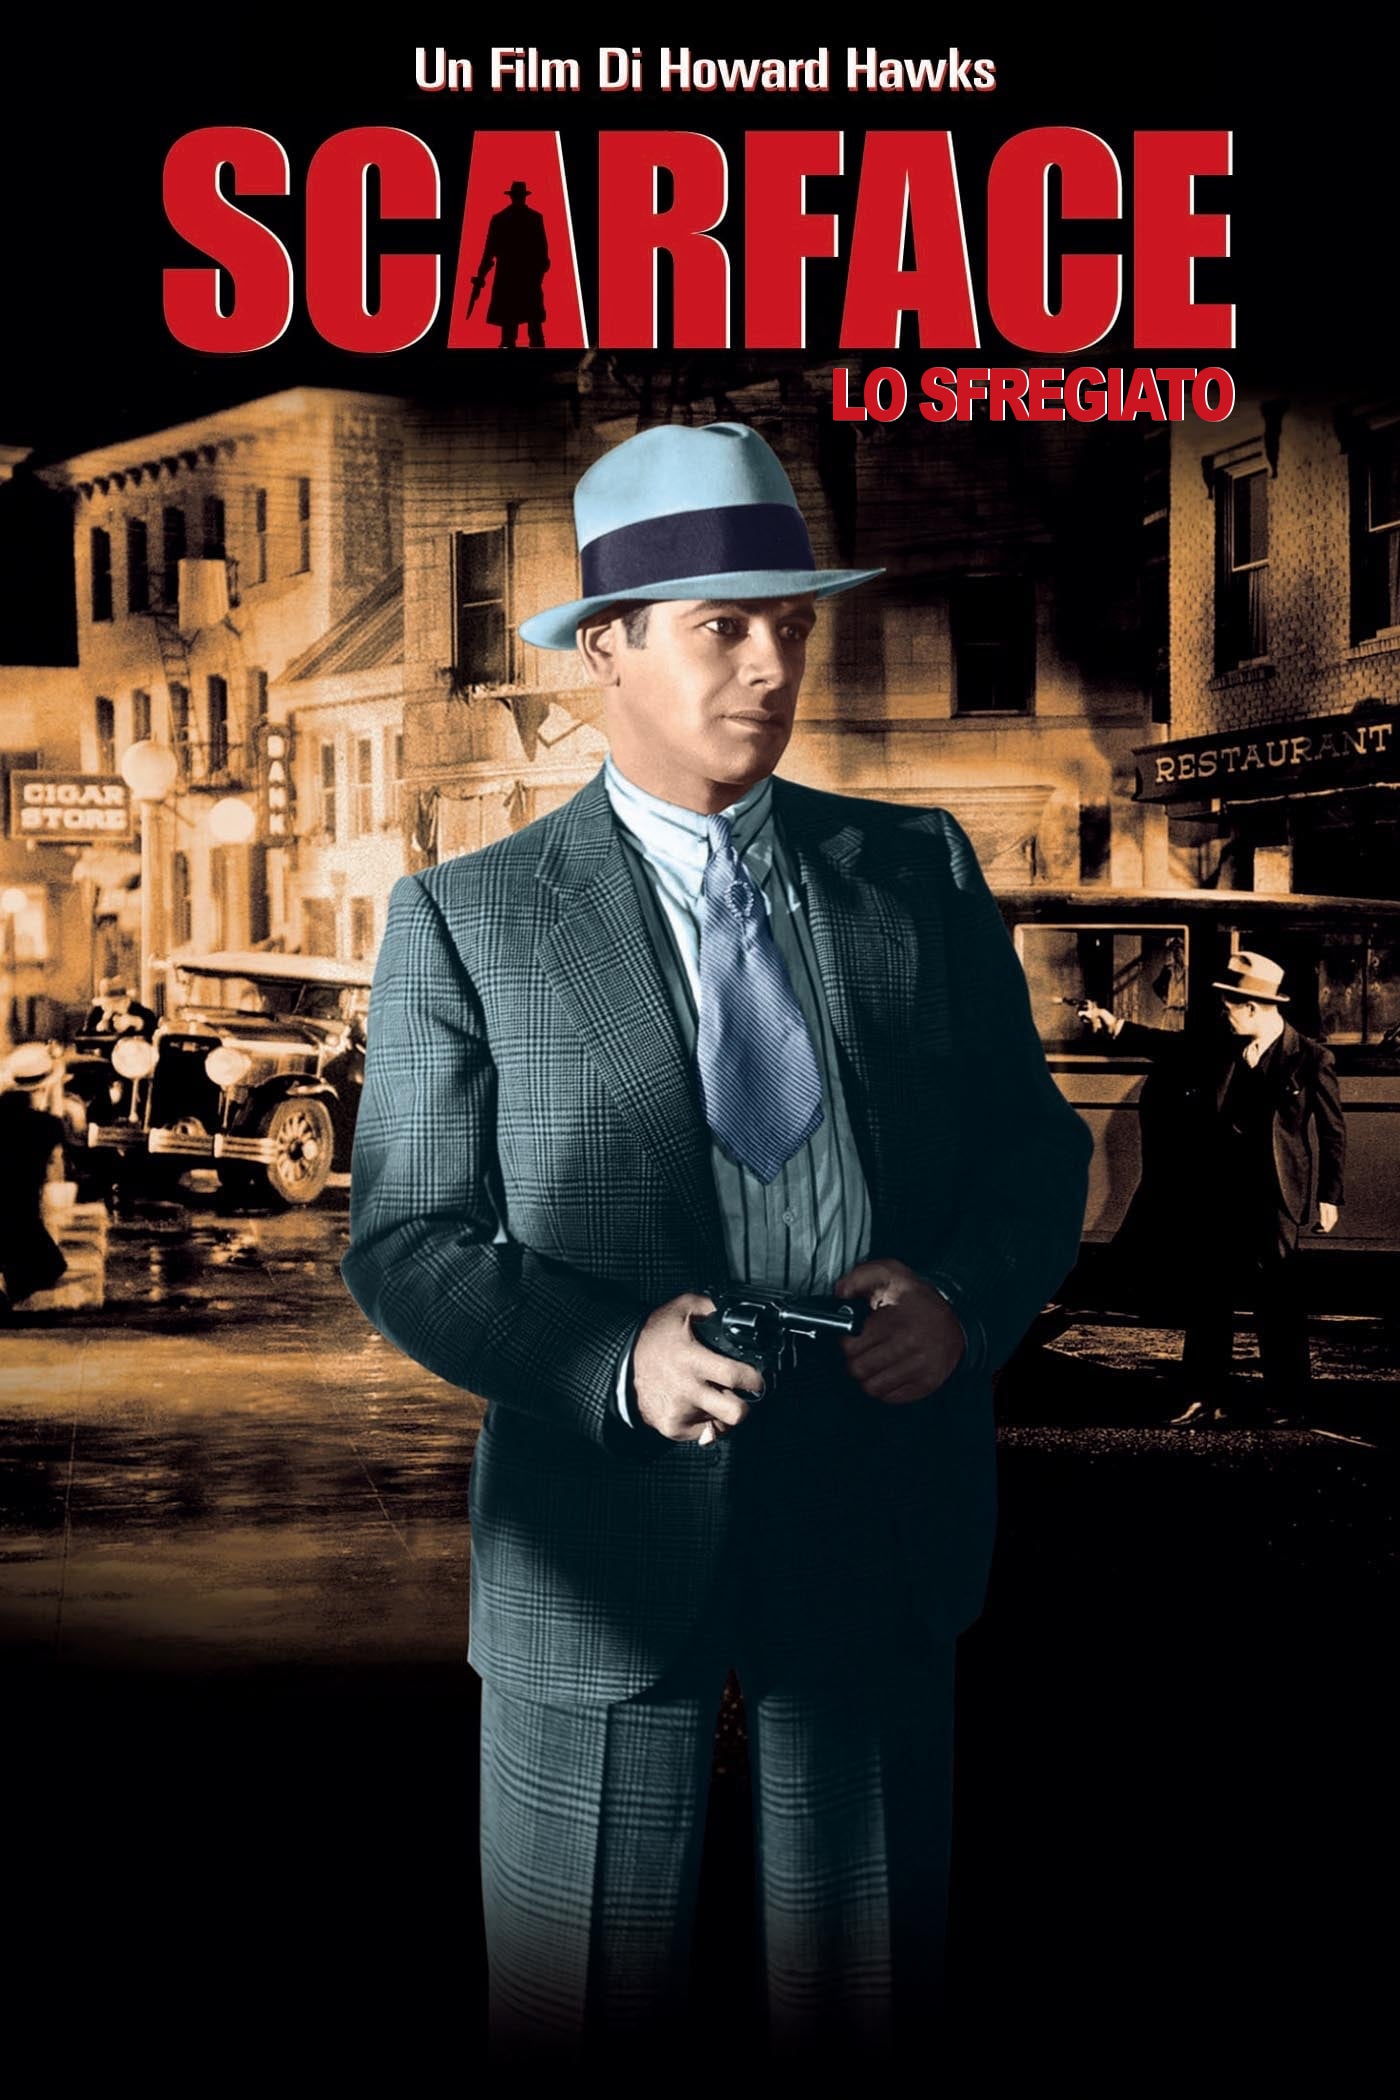 Scarface – Lo sfregiato [B/N] [HD] (1931)